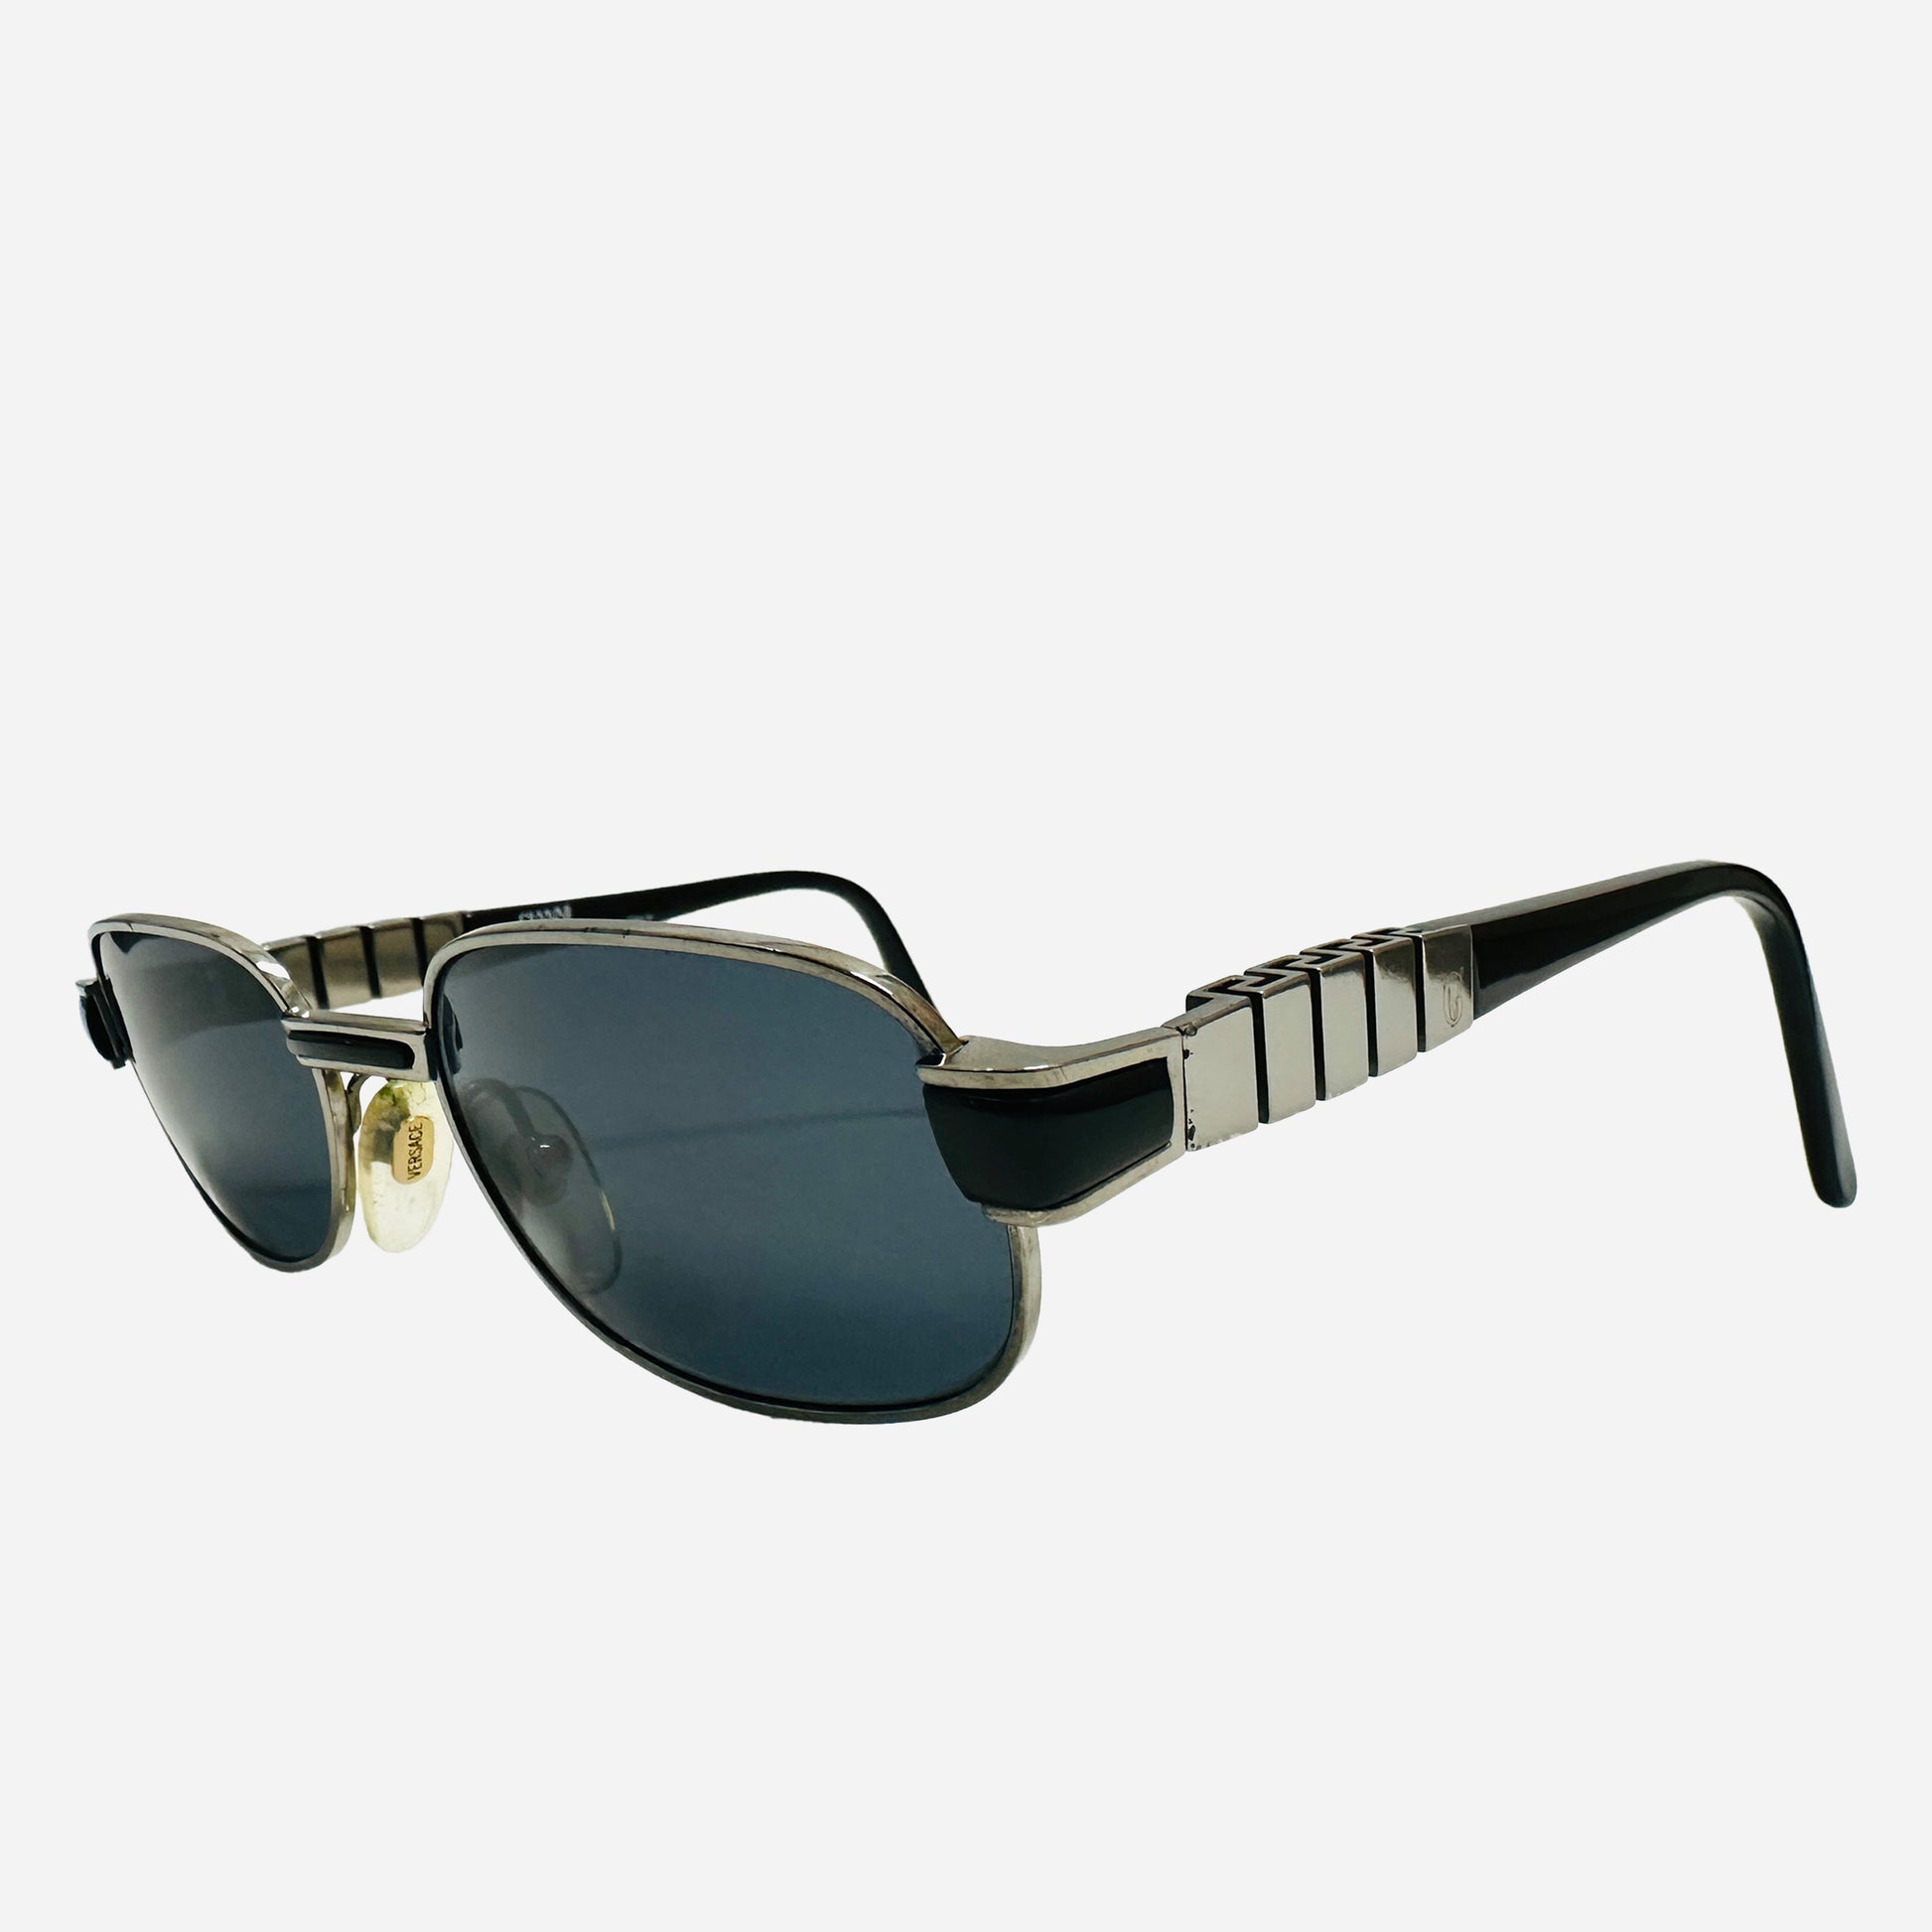 Vintage-Gianni-Versace-Sonnebrille-Sunglasses-S20-s-20-designer-the-seekers-sunglasses-front